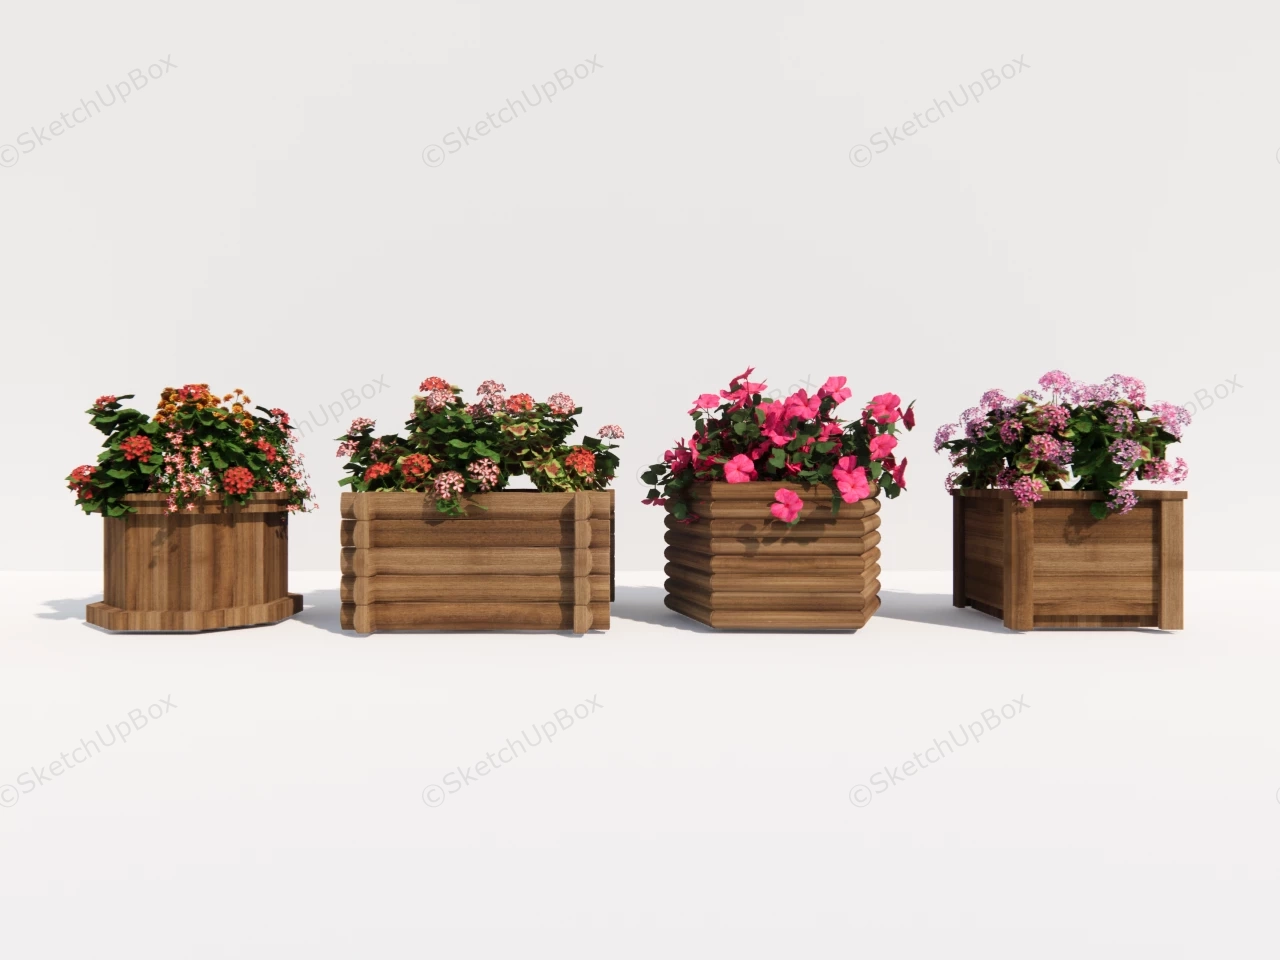 Wood Raised Planter Boxes sketchup model preview - SketchupBox